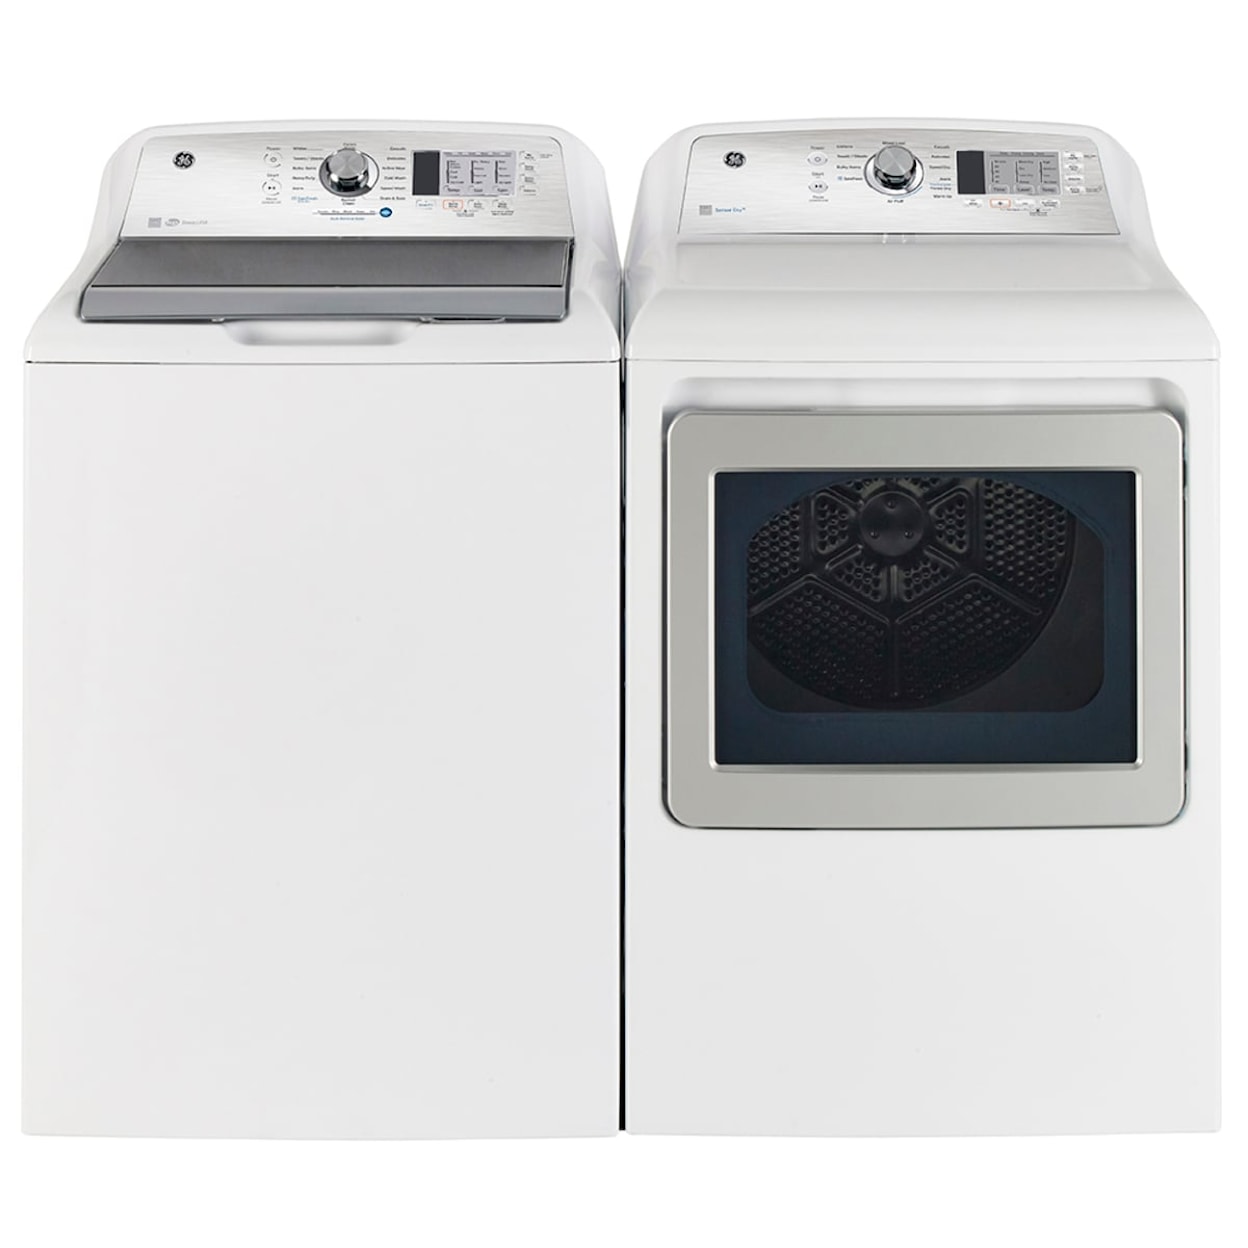 GE Appliances Dryers Top Load Gas Dryer